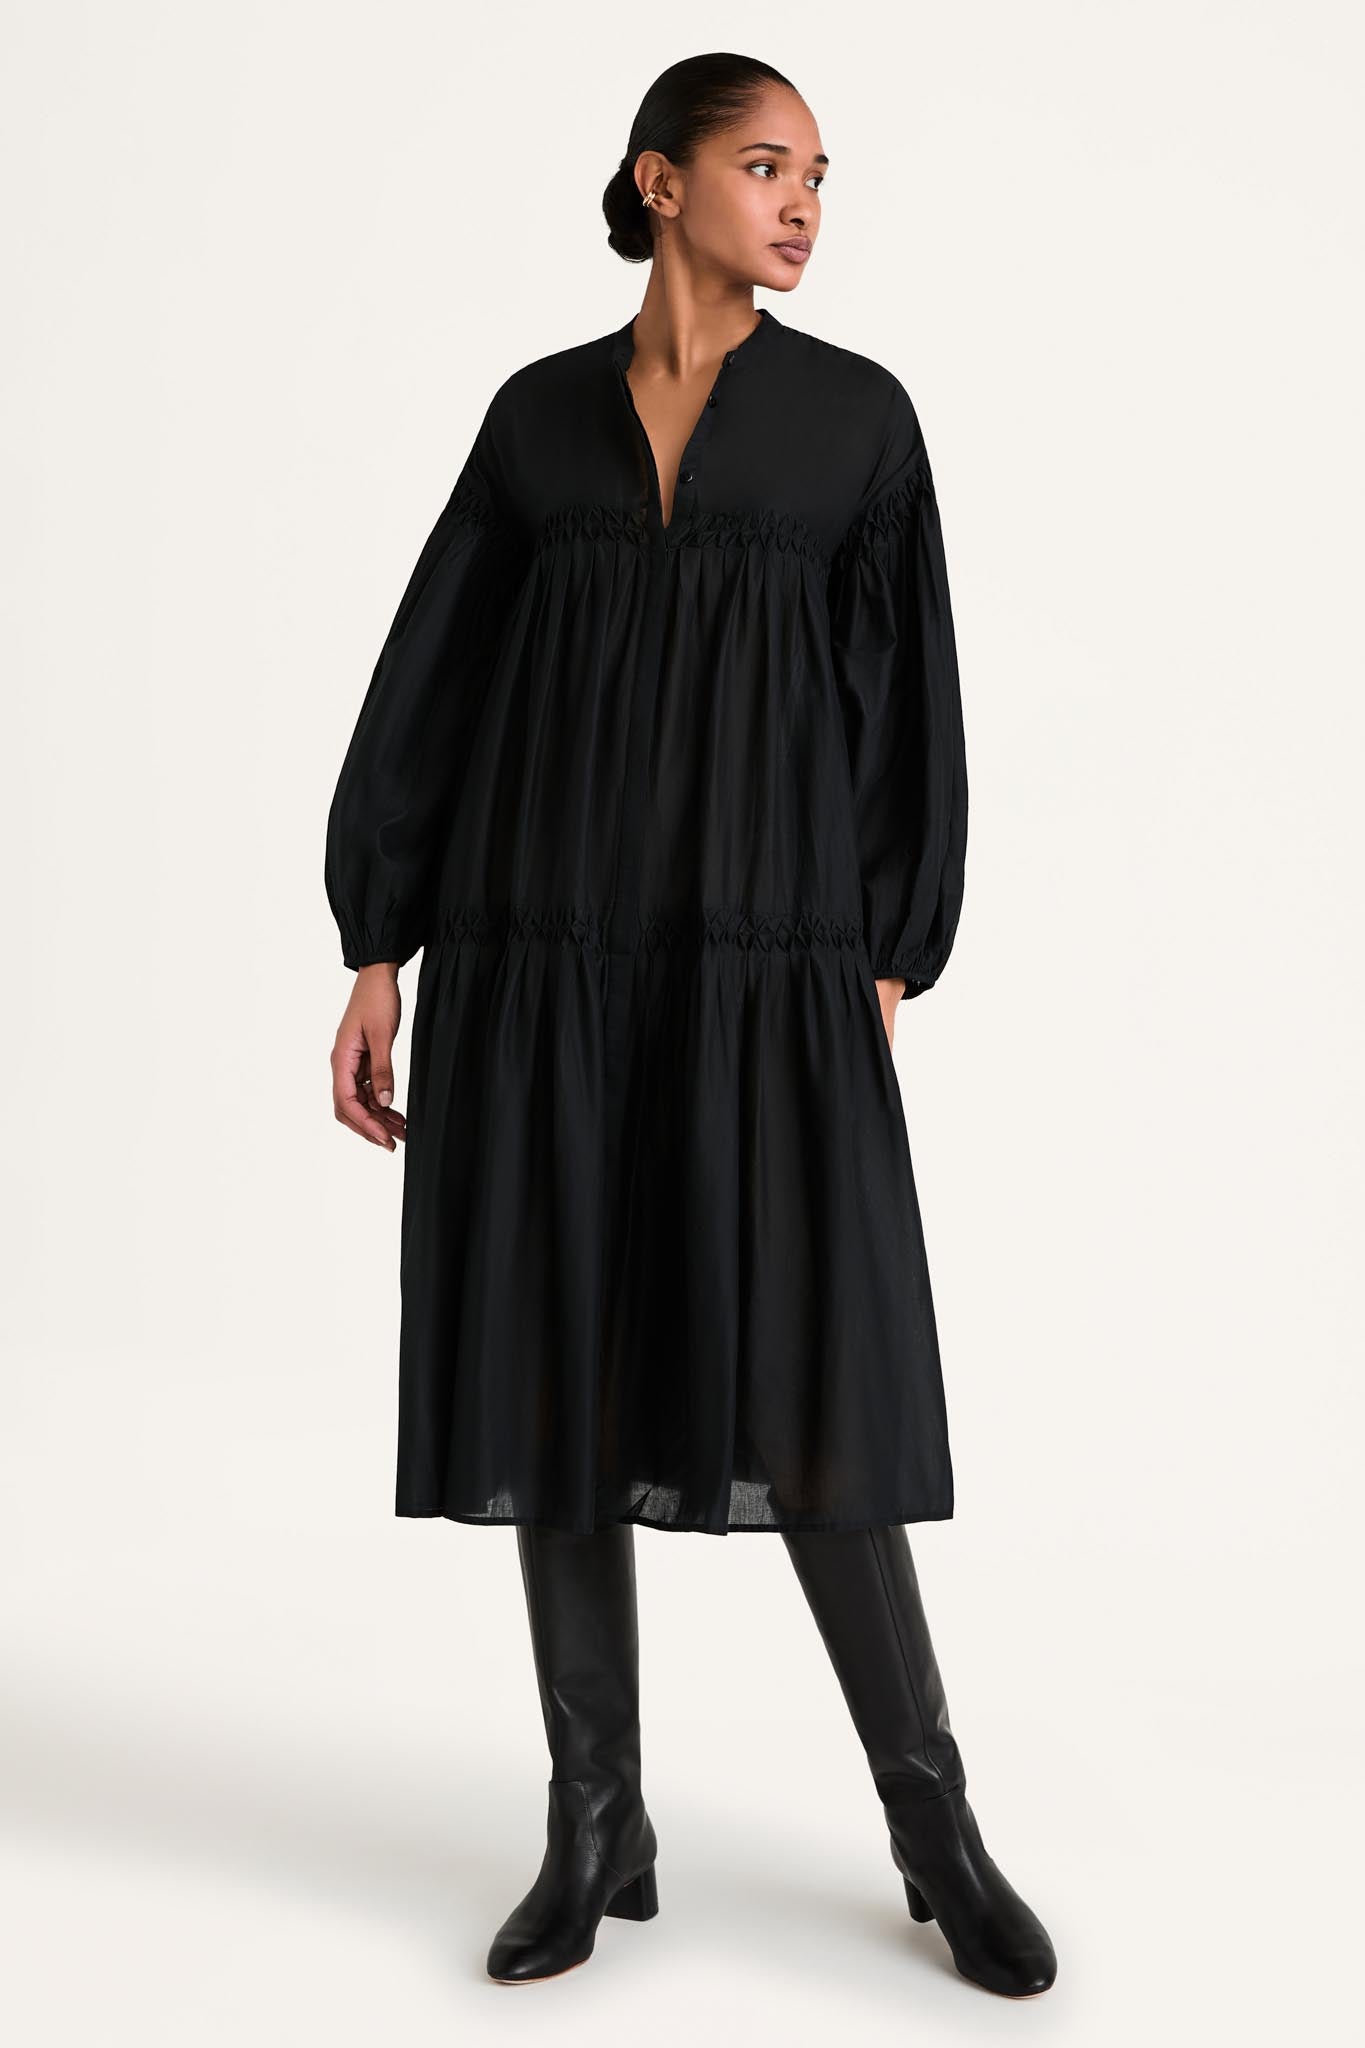 Elysium Dress in Black